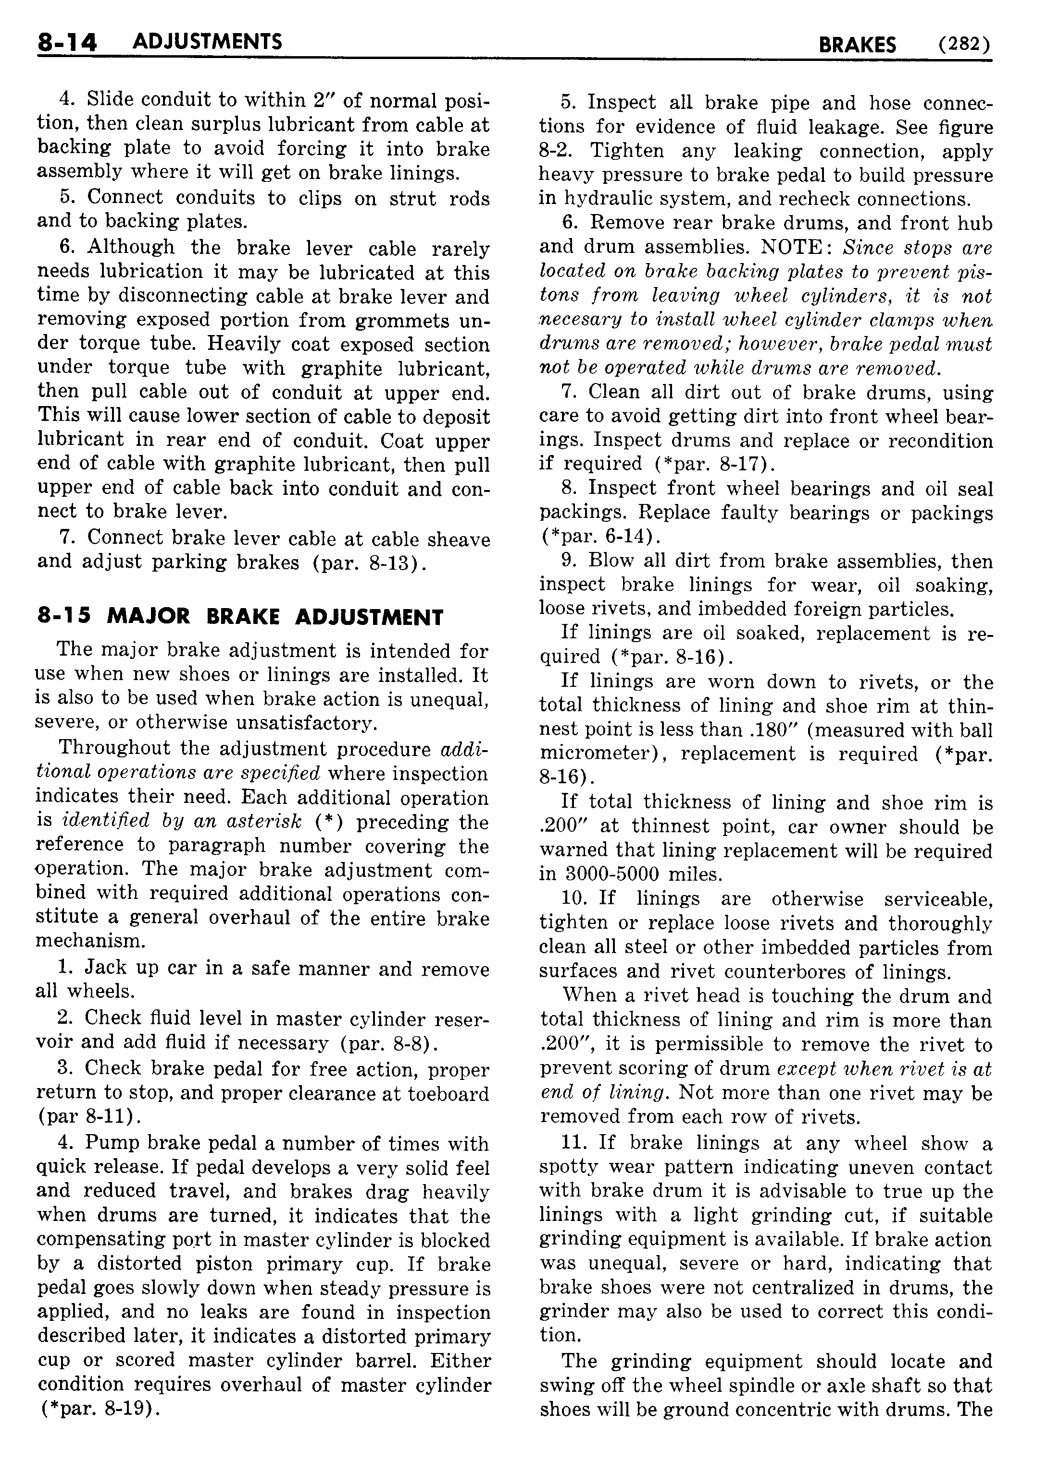 n_09 1951 Buick Shop Manual - Brakes-014-014.jpg